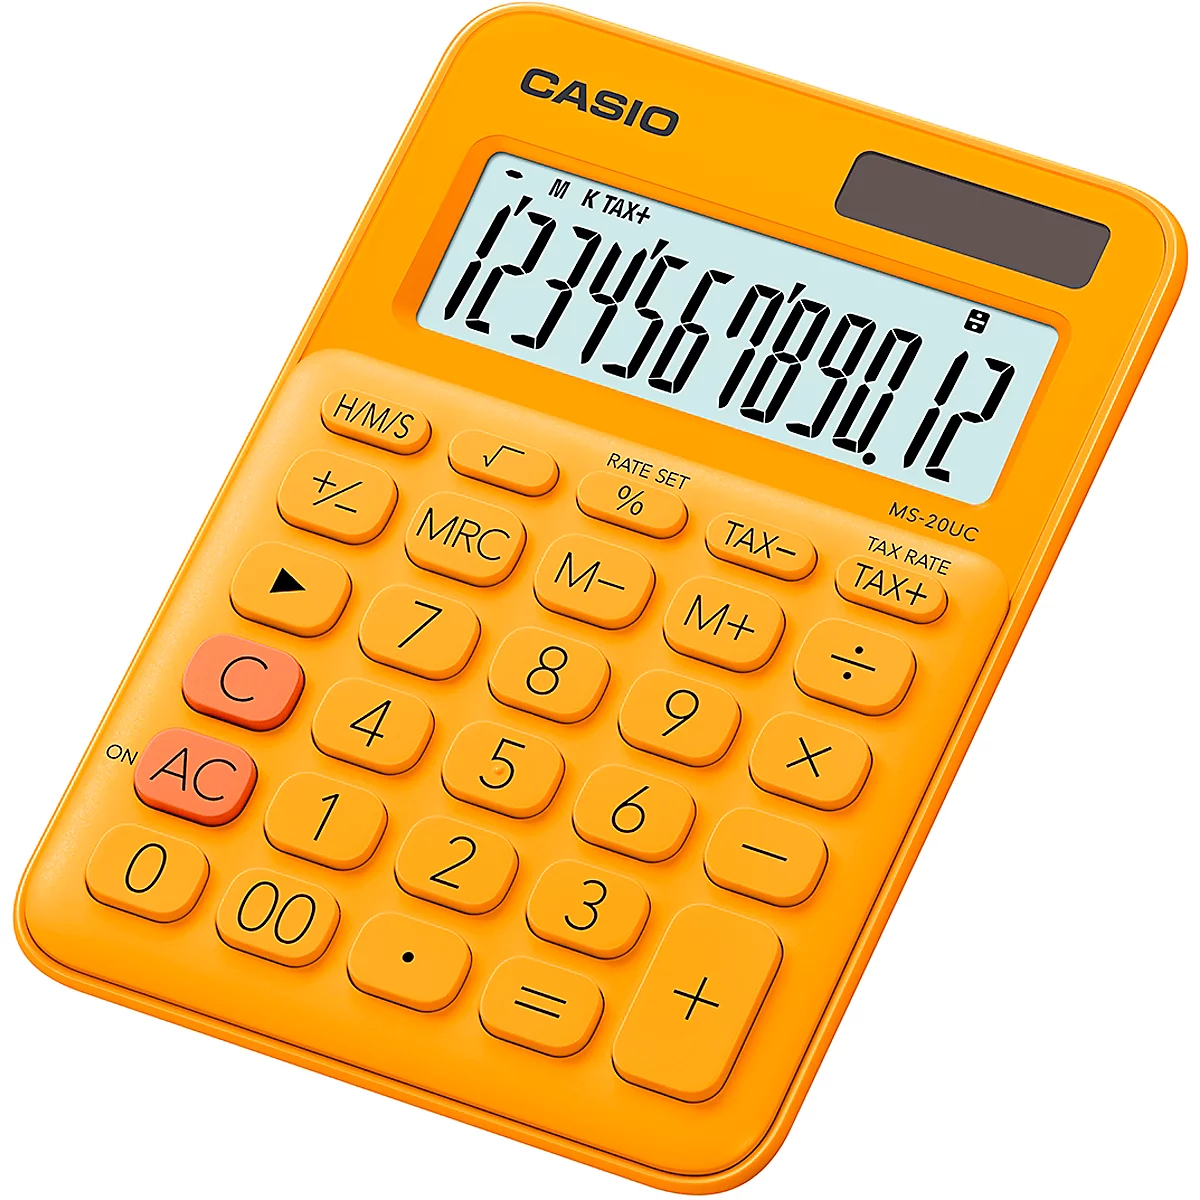 Calculadora de mesa Casio MS-20UC, pantalla LC de 12 dígitos, alimentado con batería/solar, naranja